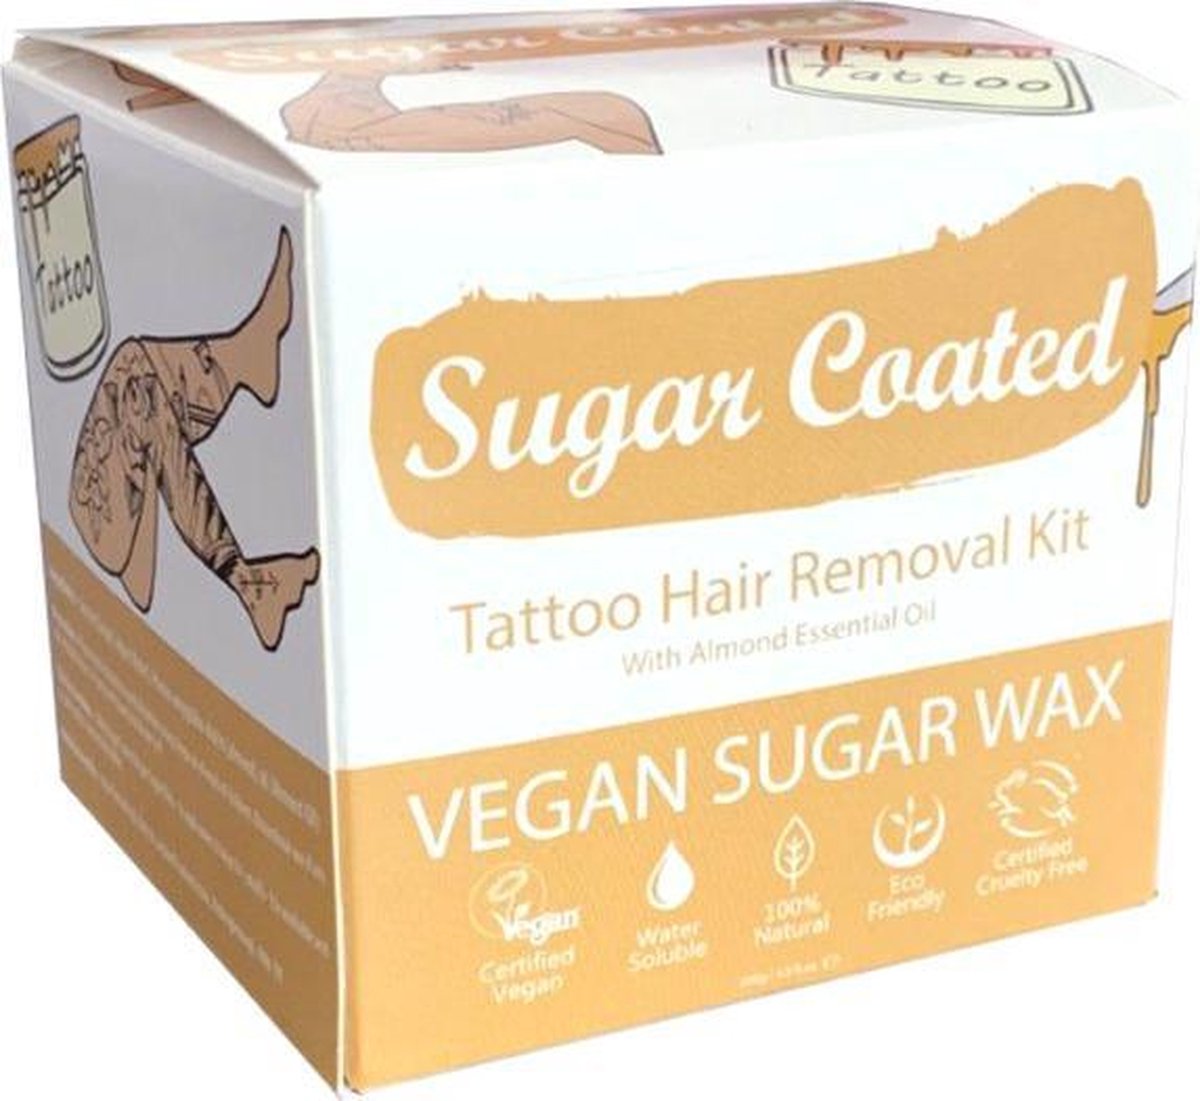 Sugar Coated Tattoo Hair Removal Kit